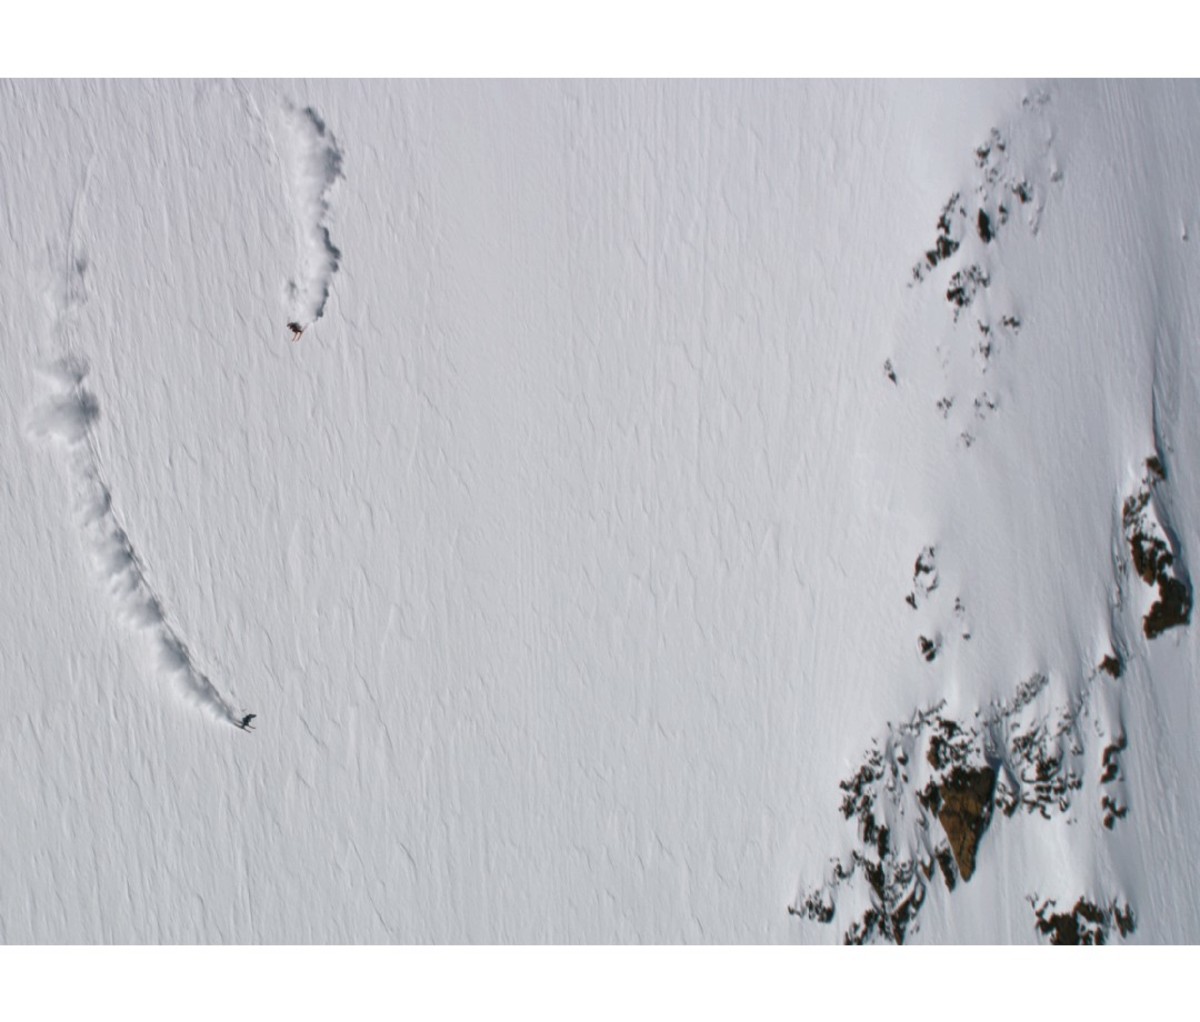 Big Mountain Skiers Sam Anthamatten and Jeremie Heitz skiing down steep powder, long aerial view